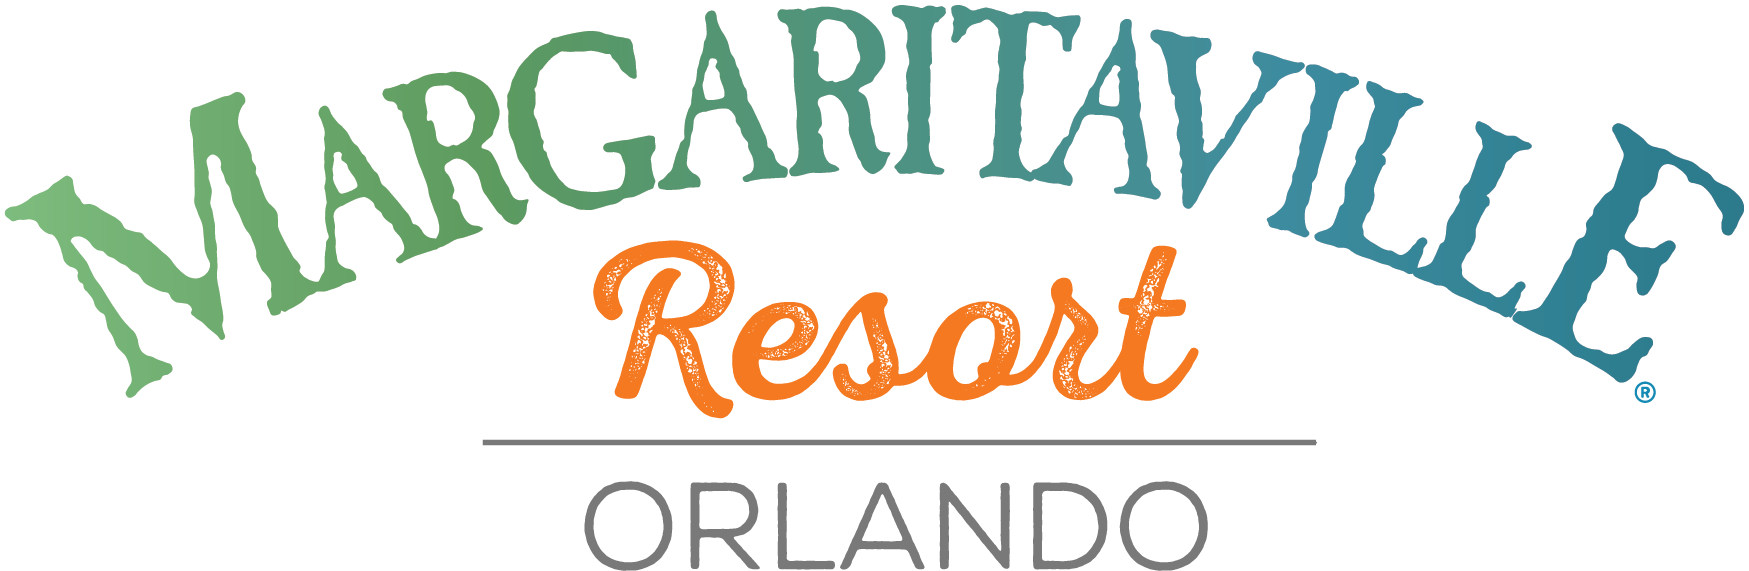 Margaritaville Orlando logotype